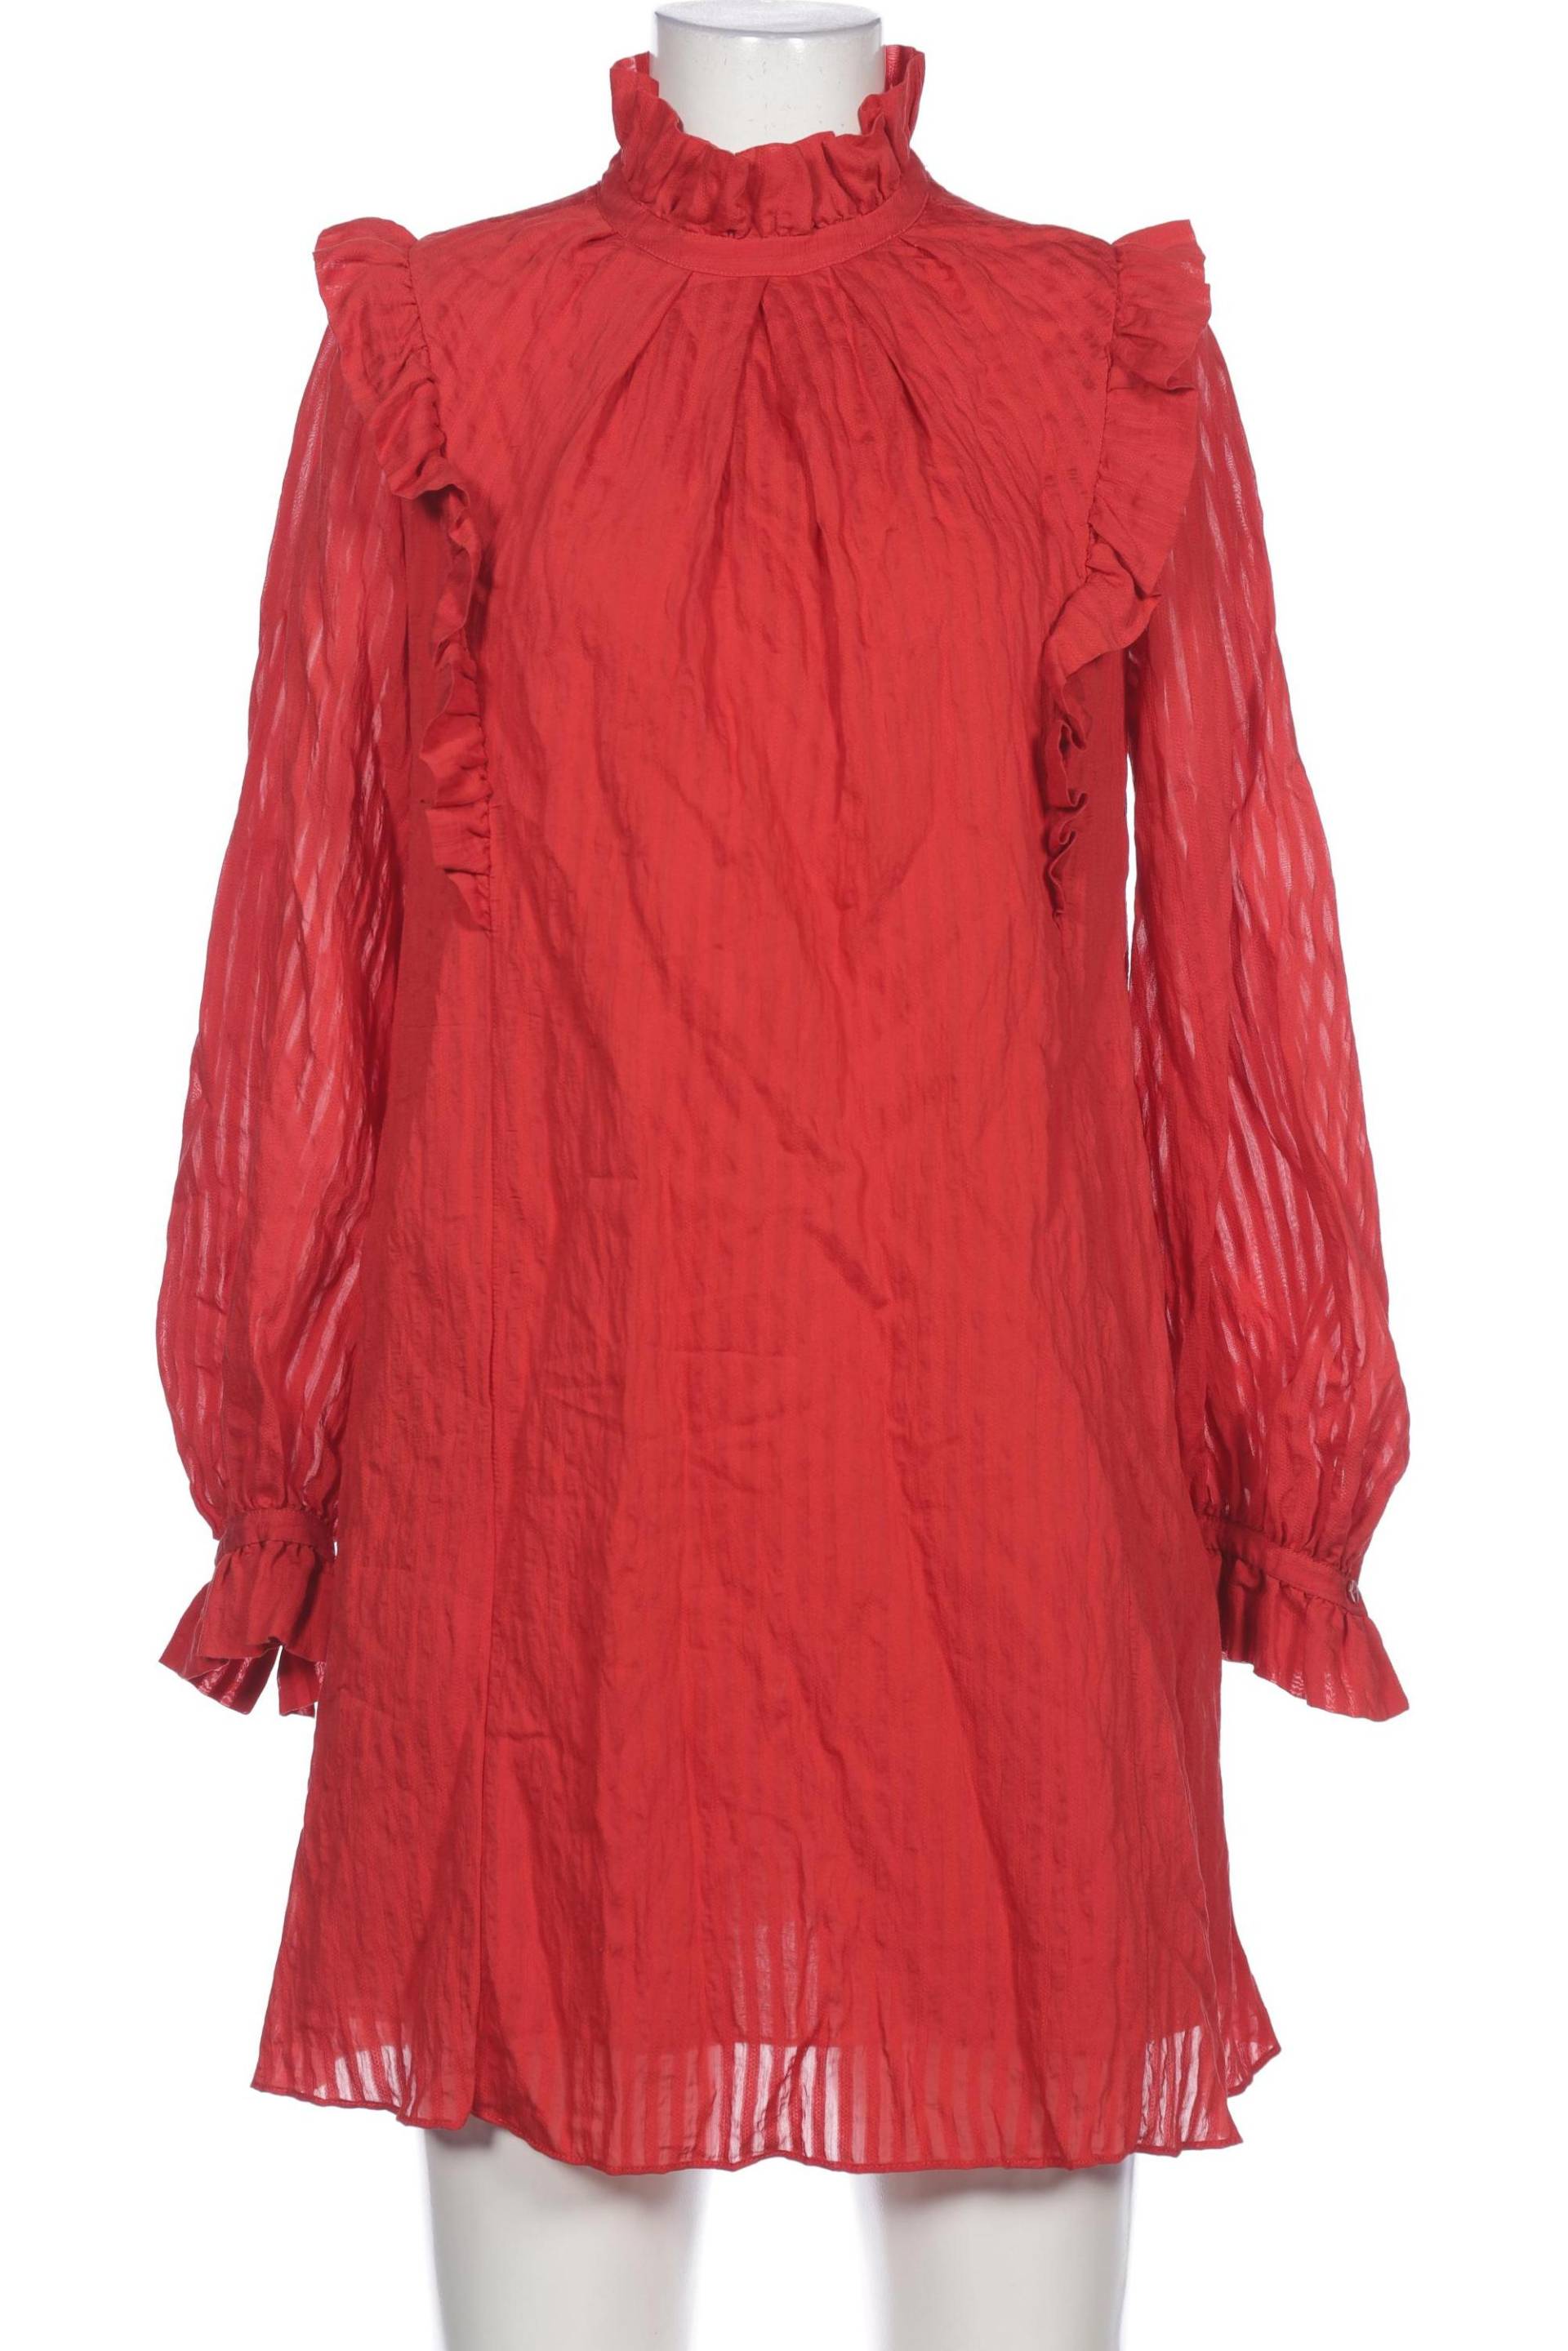 Tara Jarmon Damen Kleid, rot, Gr. 36 von Tara Jarmon